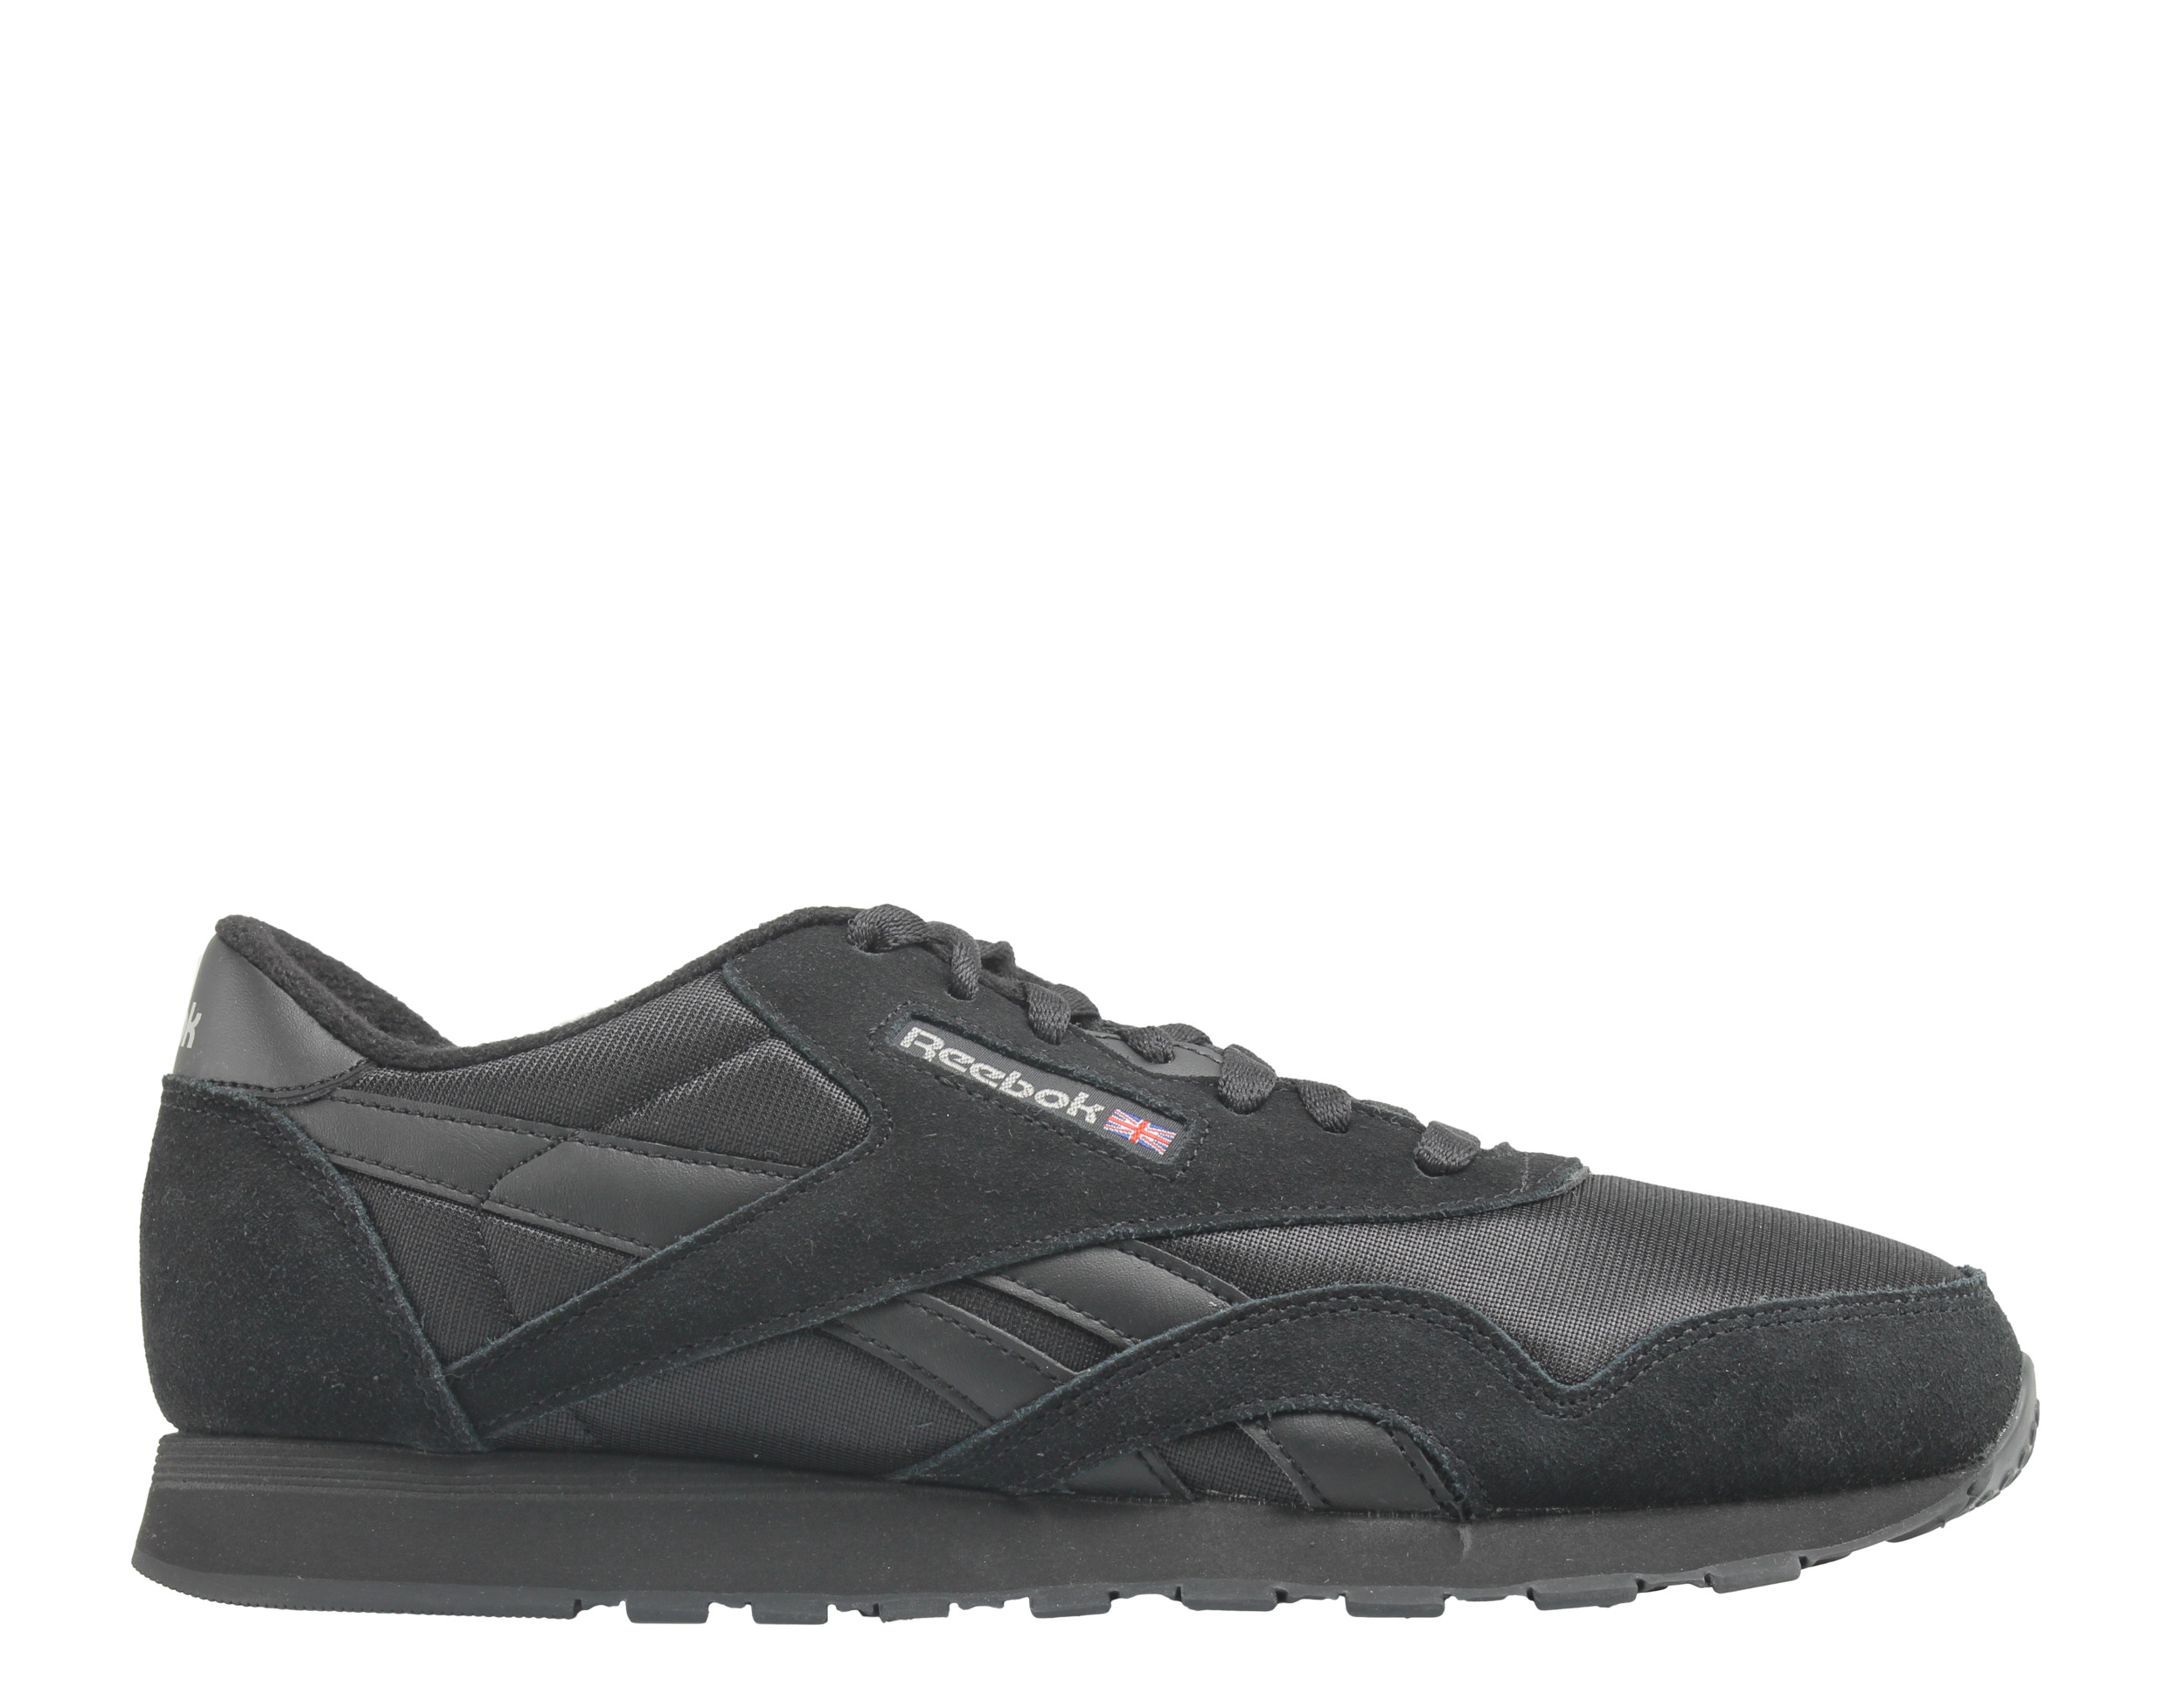 Reebok Classic Nylon Men's Running Shoes Size 12 - image 2 of 6